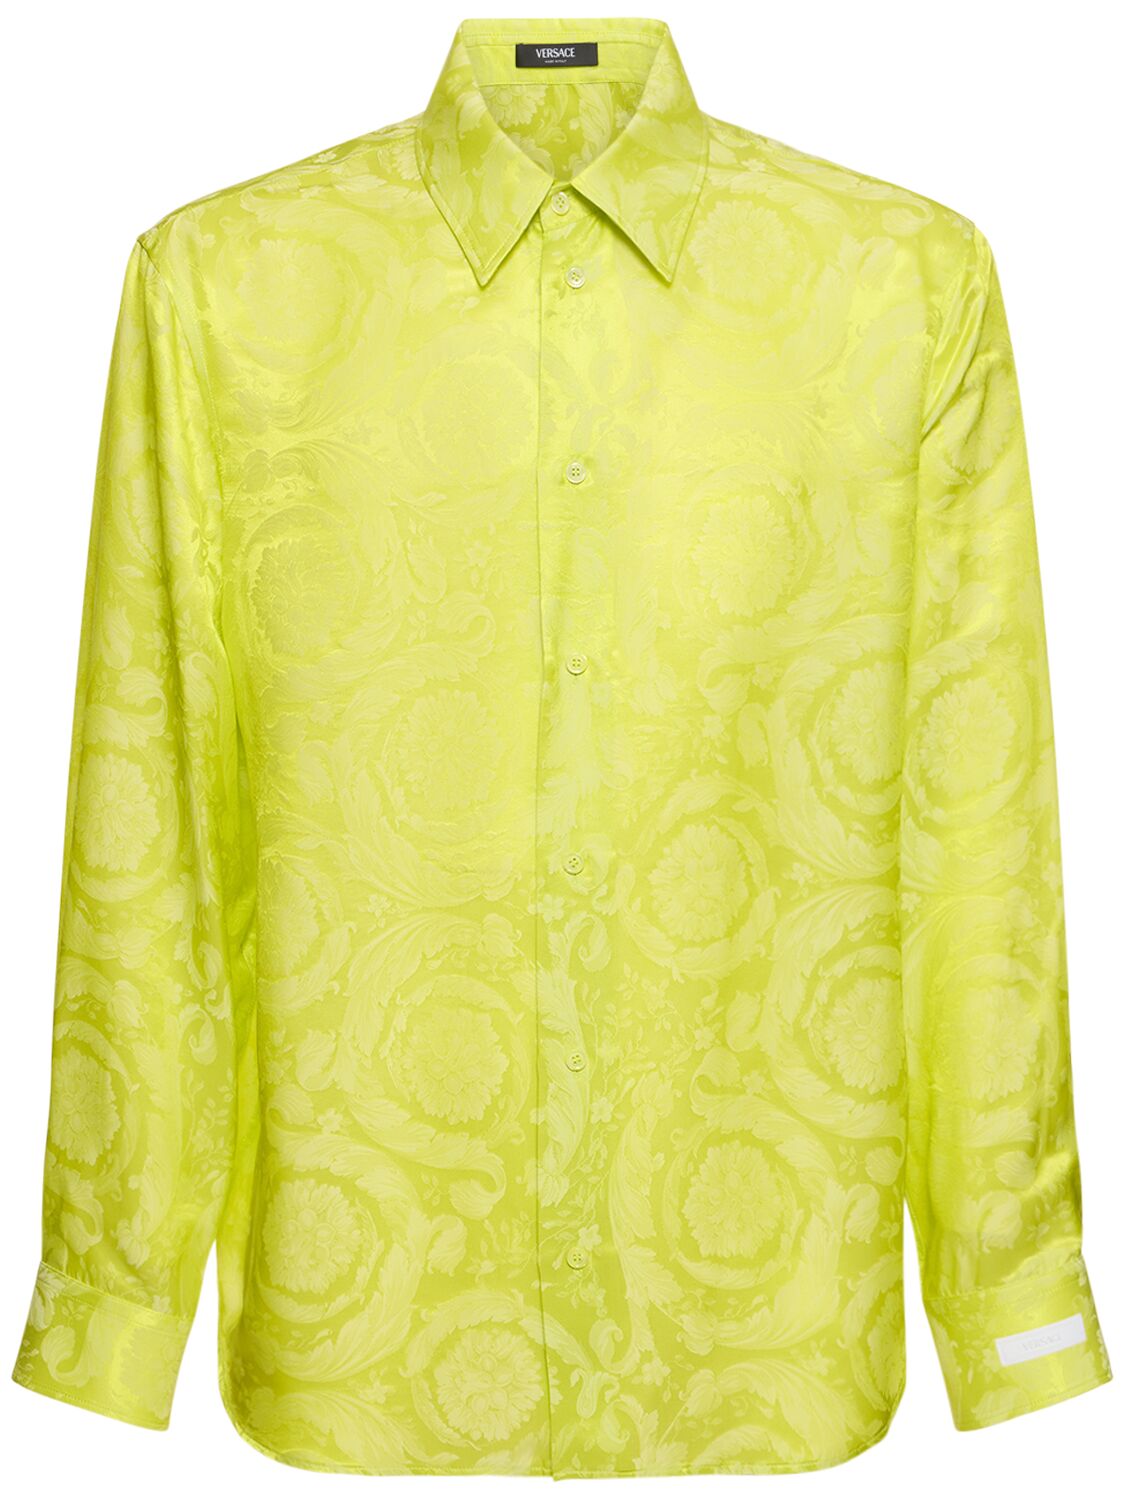 Versace Barocco粘胶纤维&真丝衬衫 In Mimosa